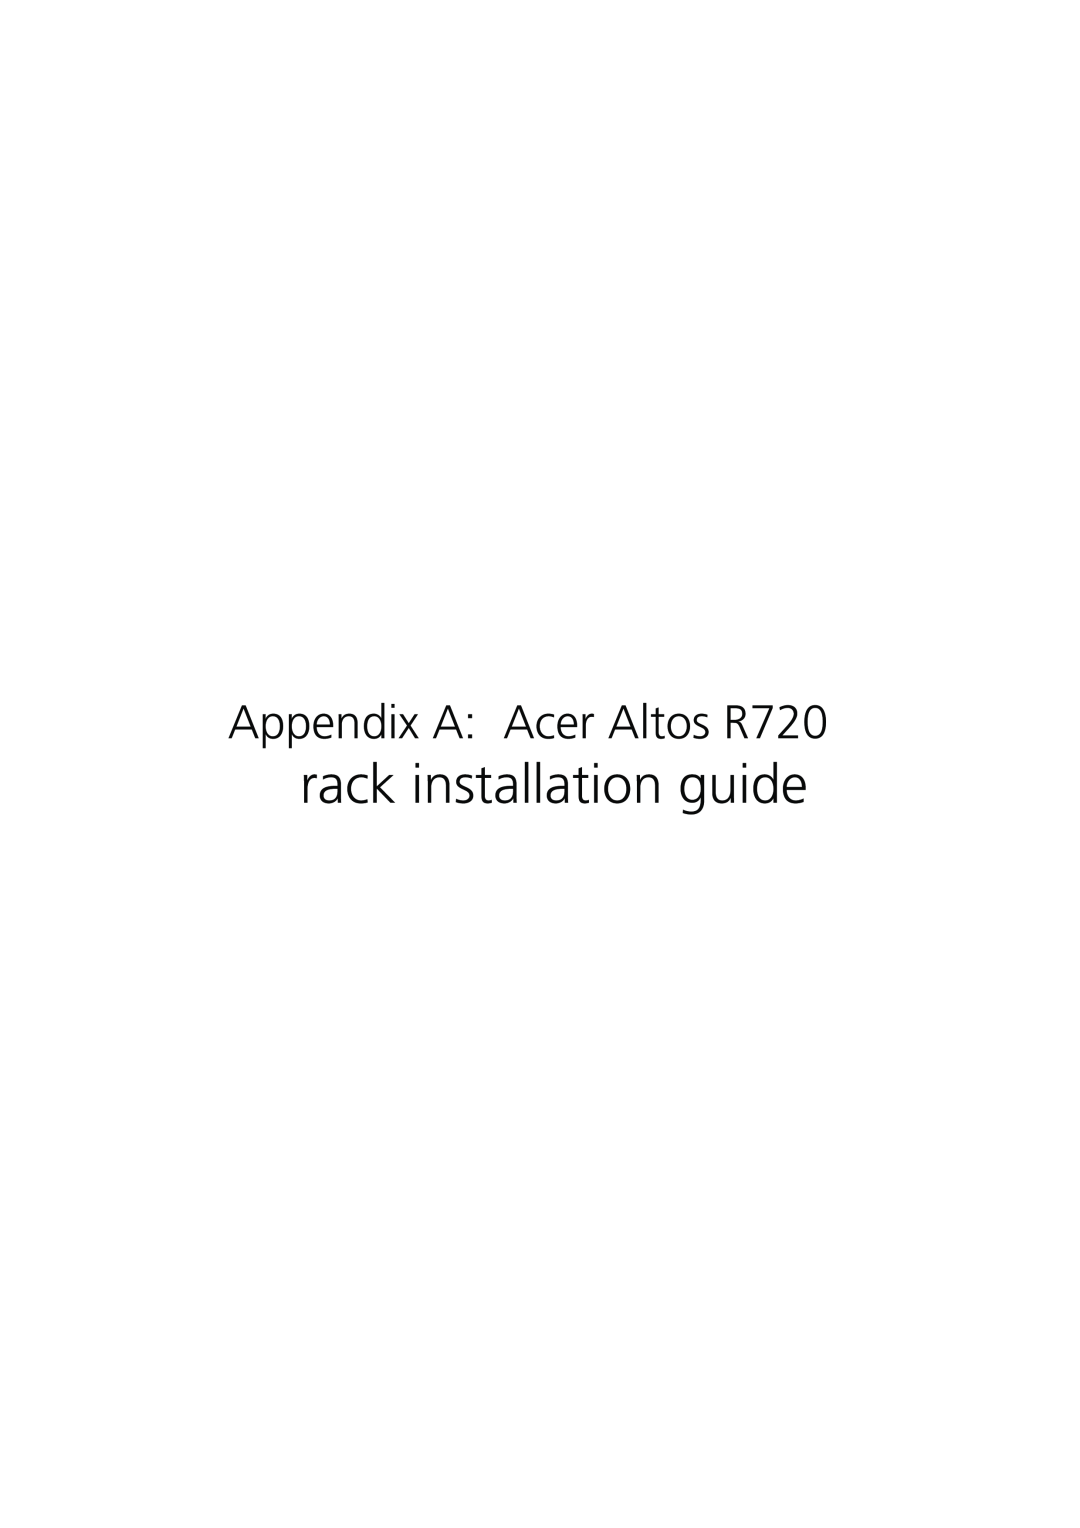 Acer R720 Series manual rack installation guide, Appendix A Acer Altos R720 